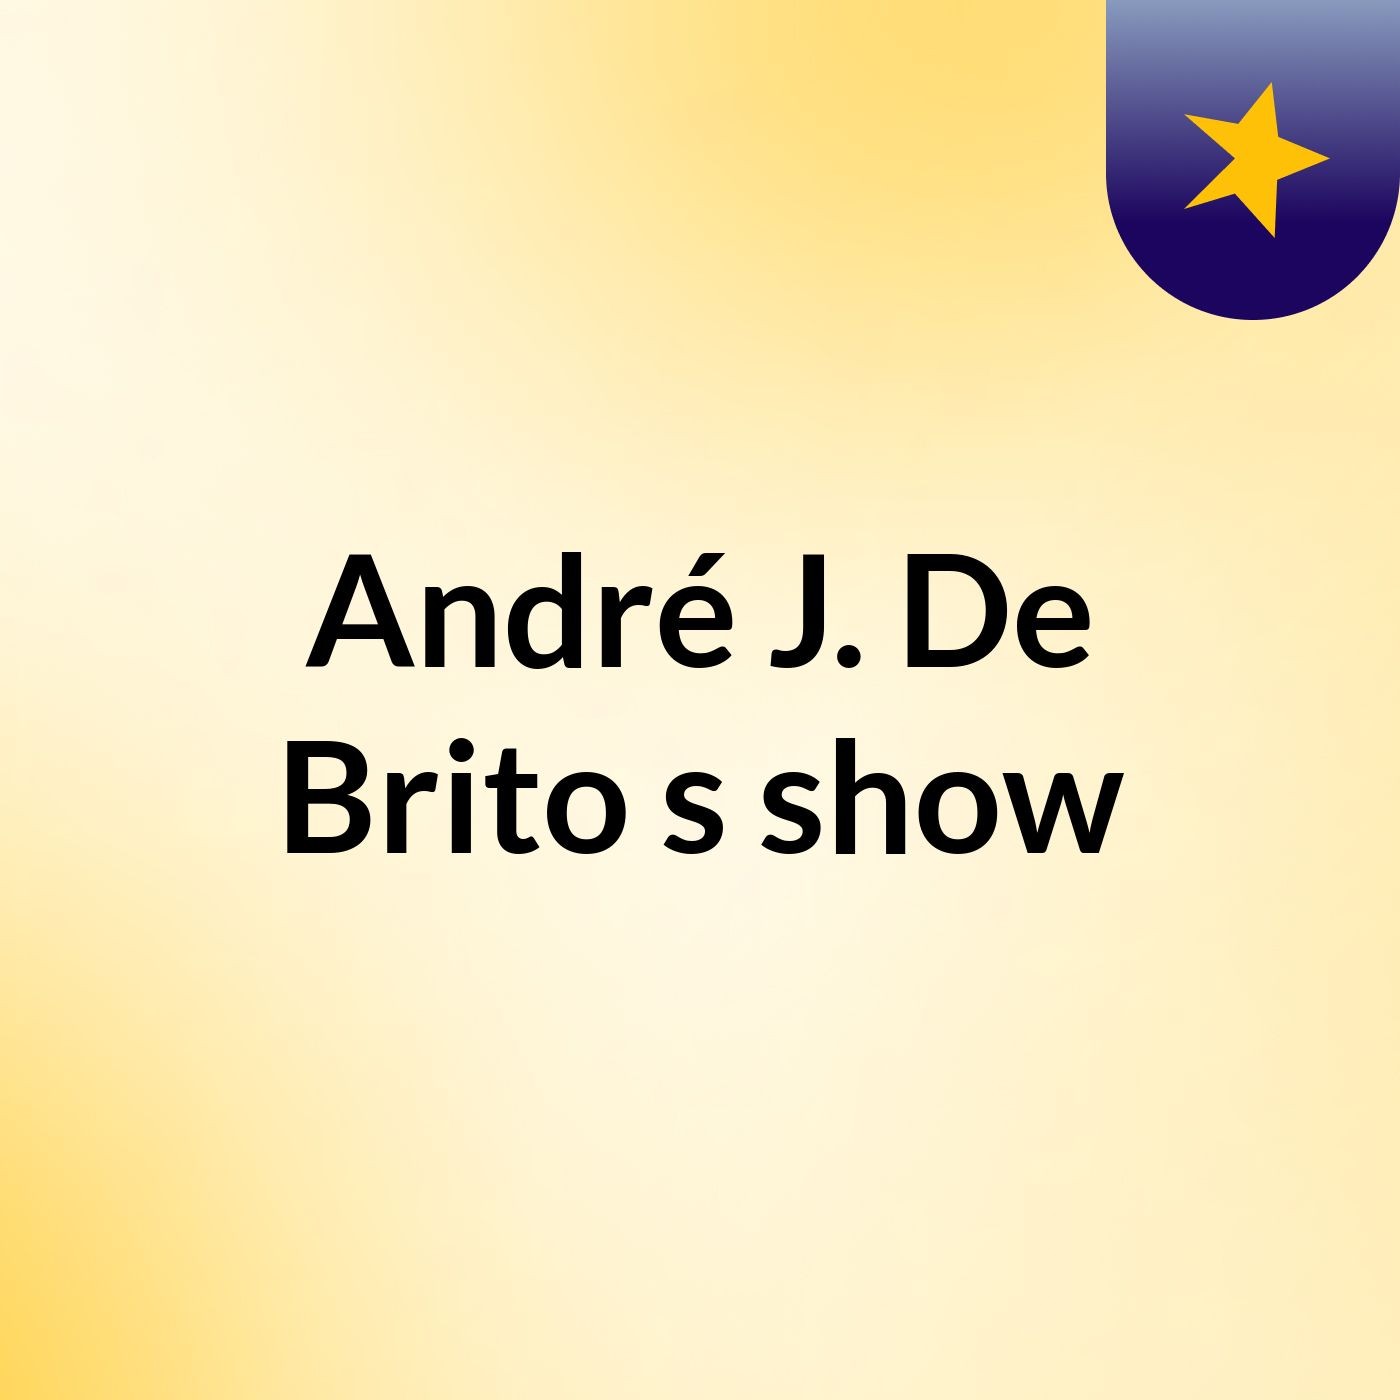 André J. De Brito's show